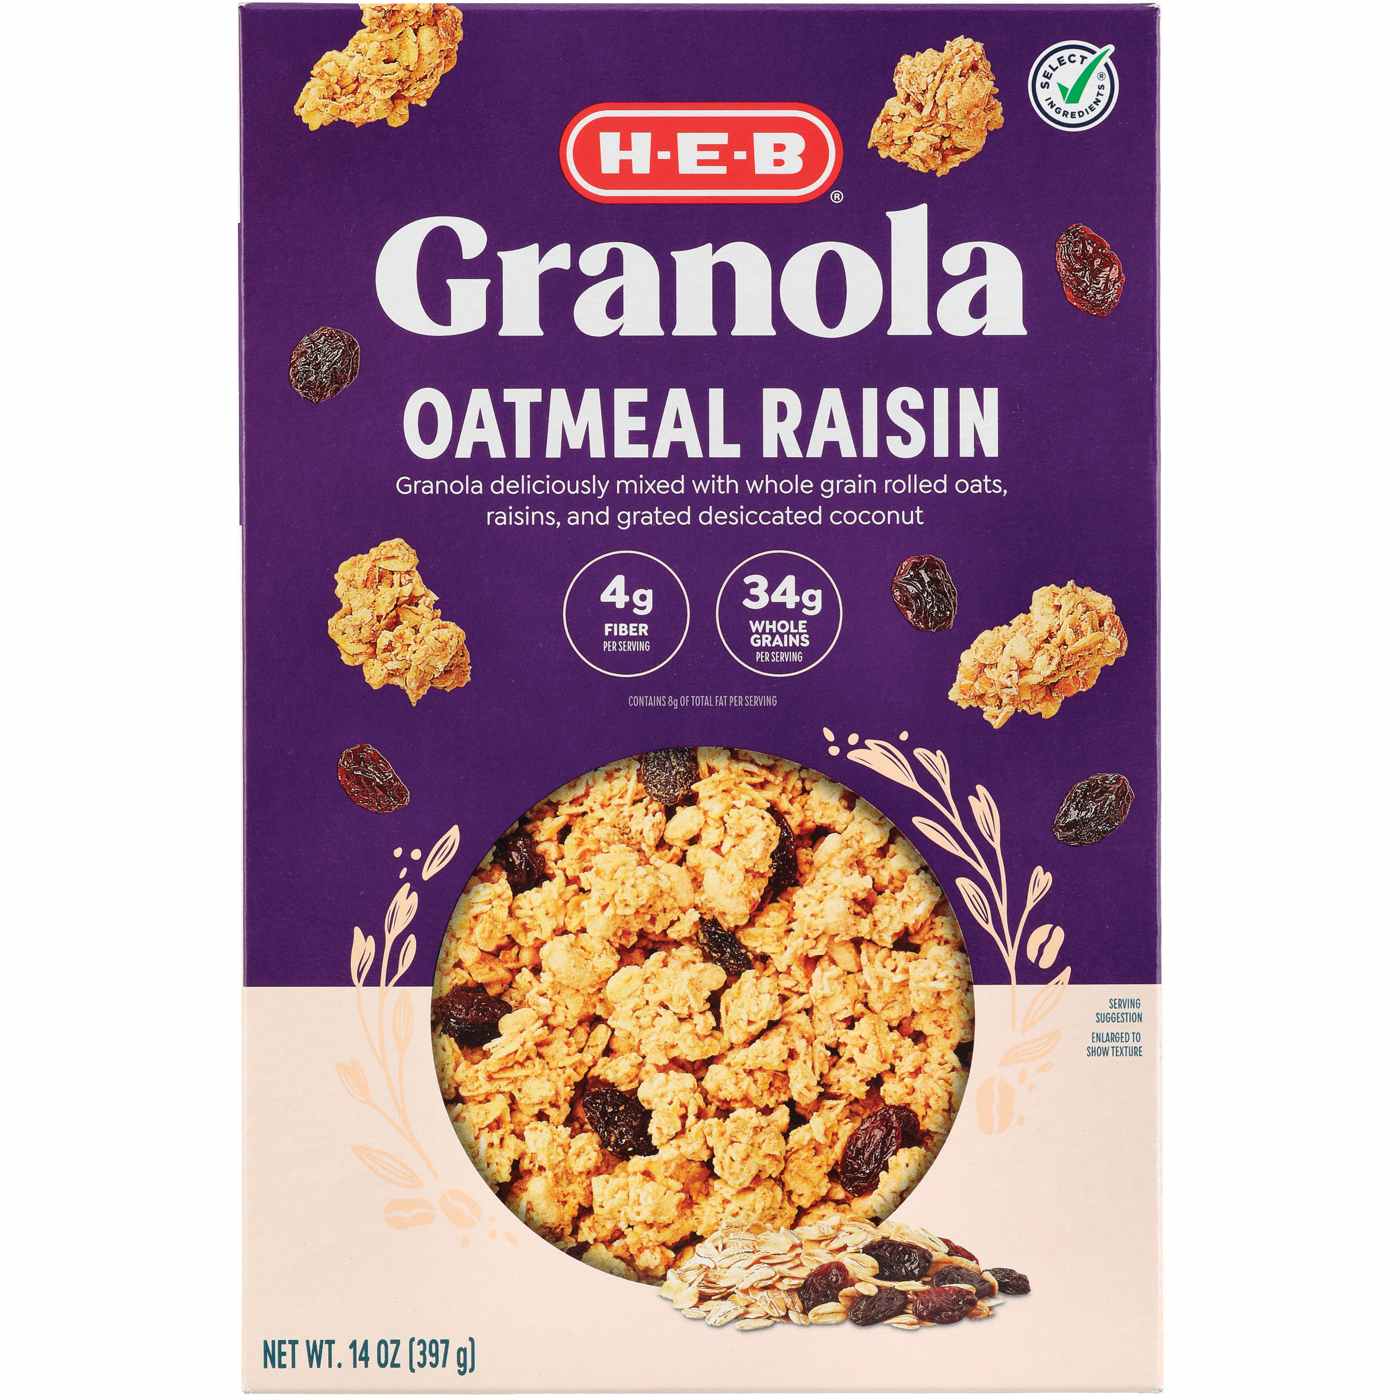 H-E-B Oatmeal Raisin Granola; image 1 of 2